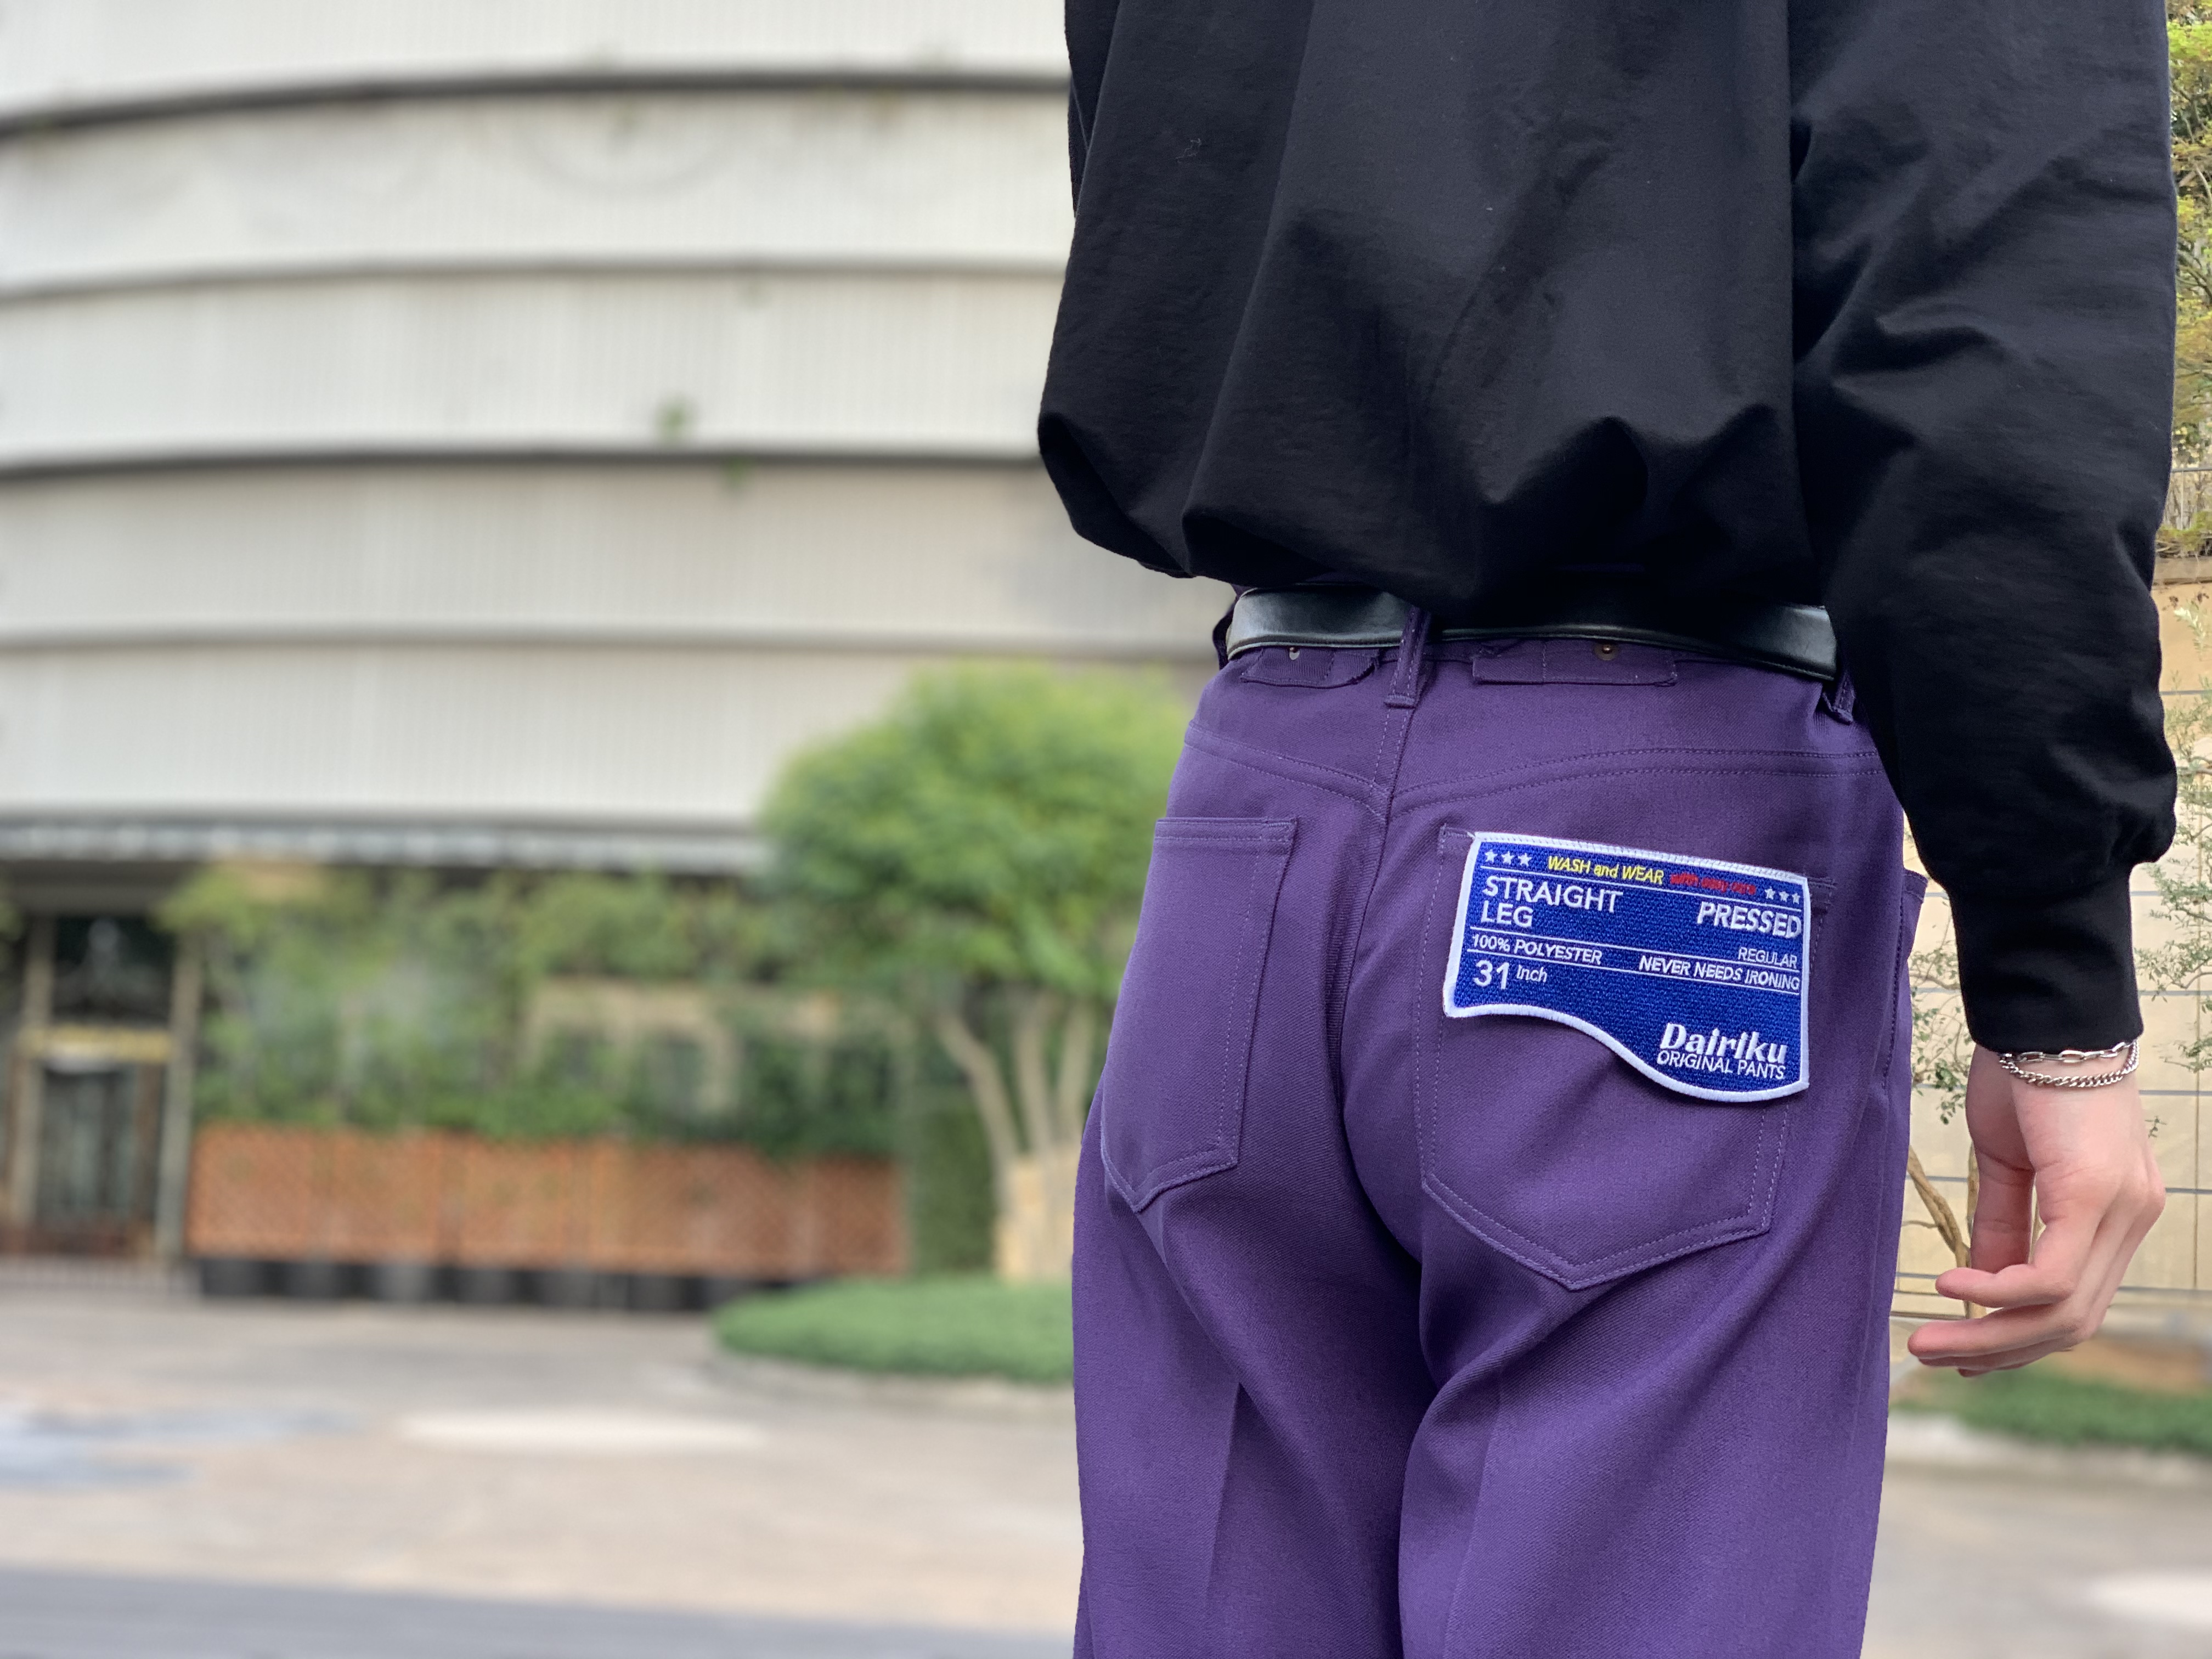 DAIRIKU Flasher Pressed Pants purple 29-